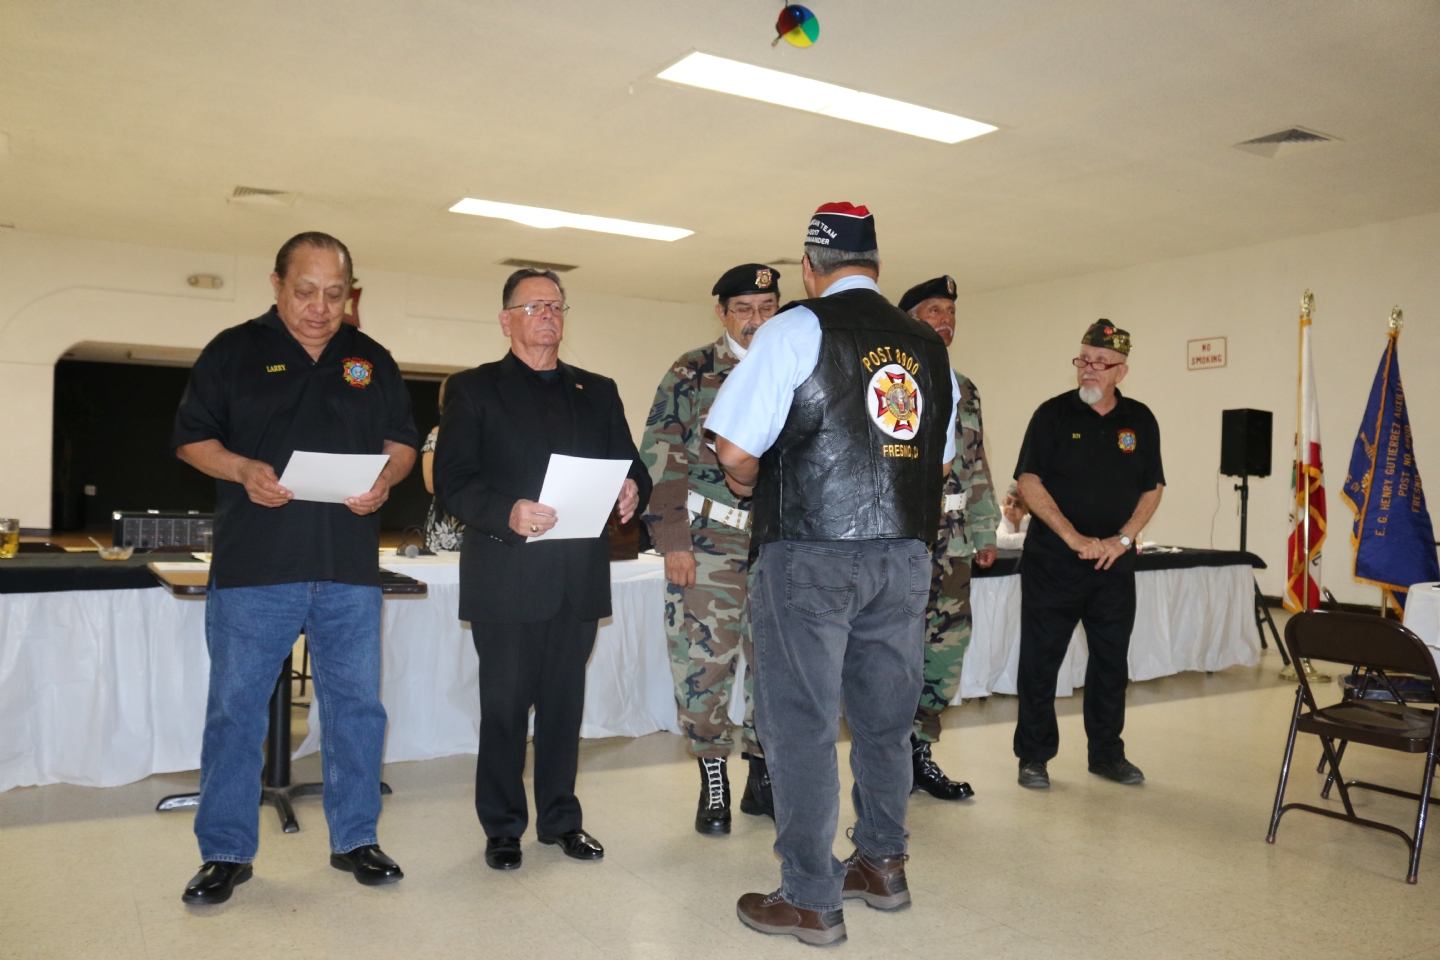 Commander Fernandez presents awards to the Post Honor Guard members.